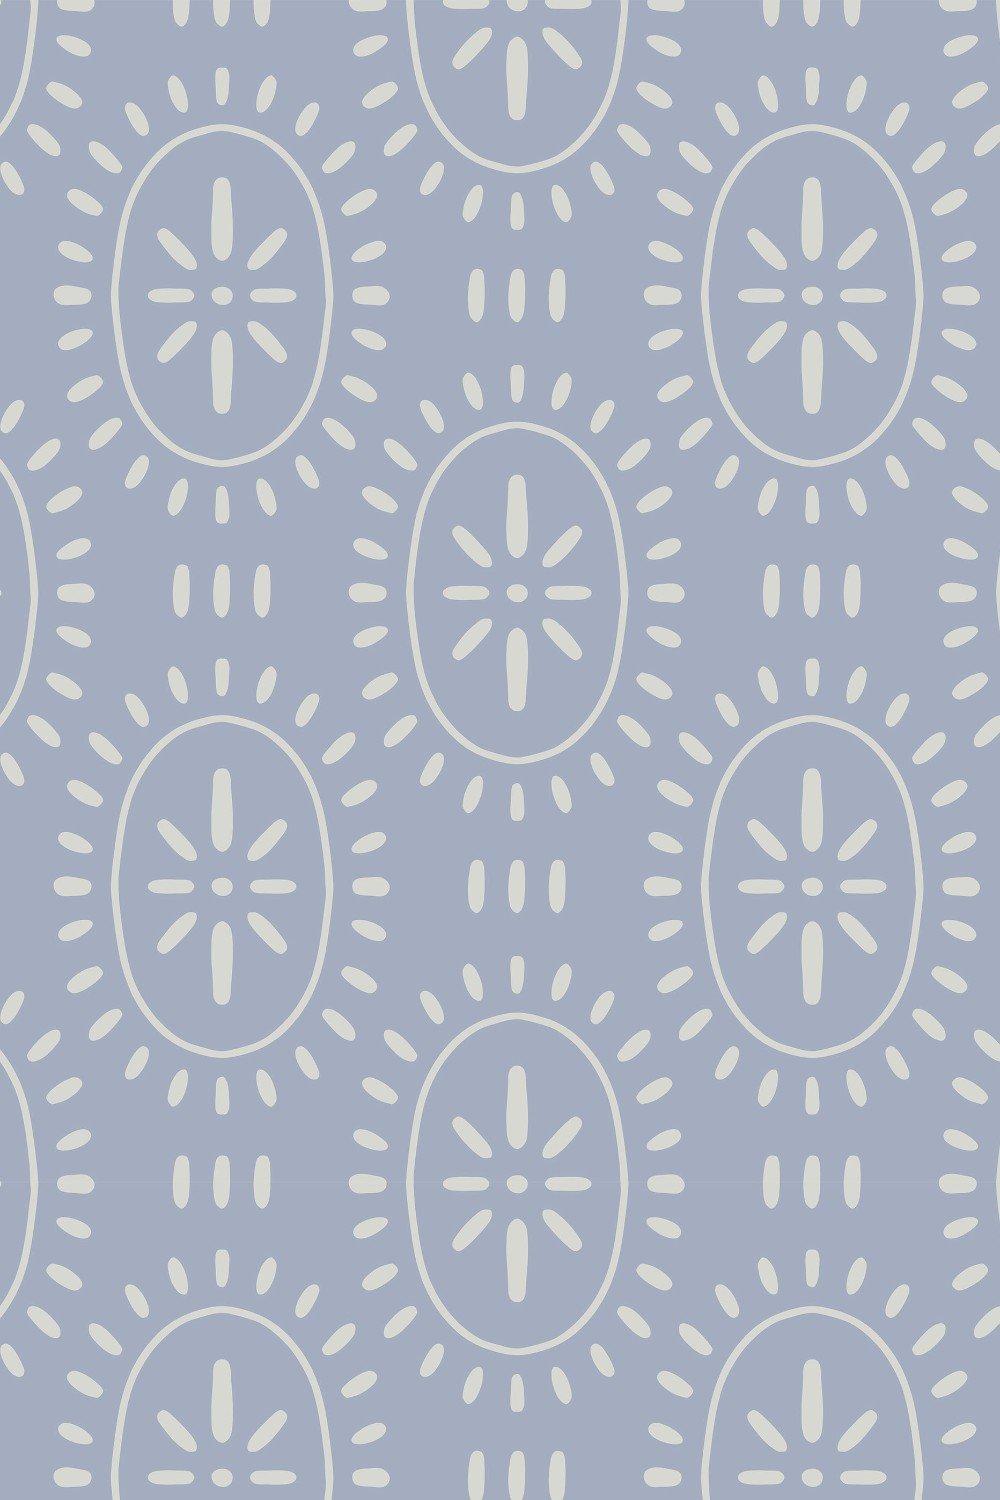 Eco-Friendly Sun Motif Pattern Wallpaper